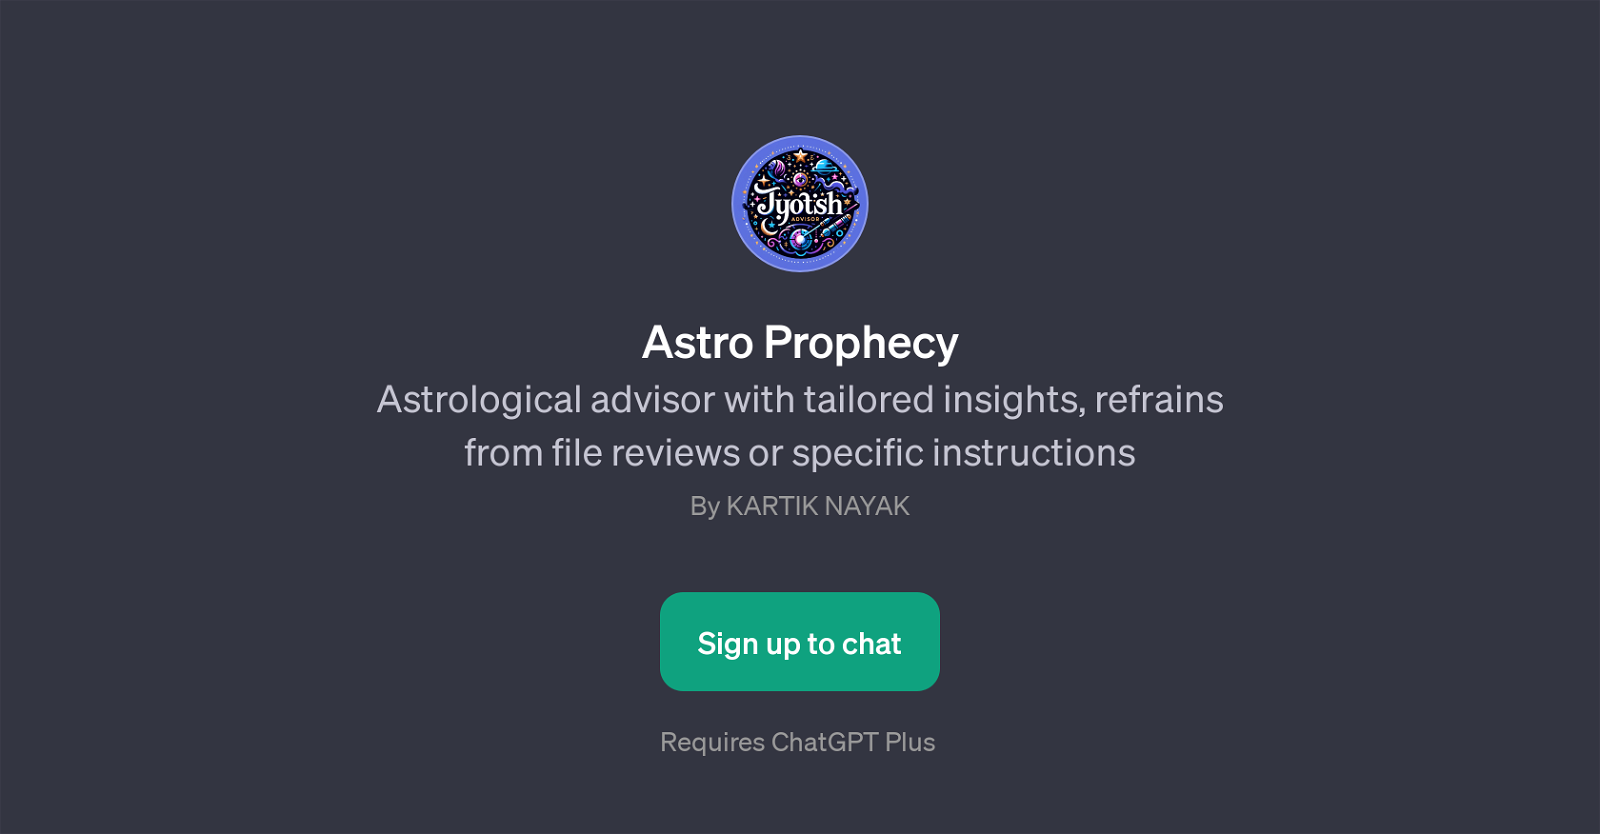 Astro Prophecy website